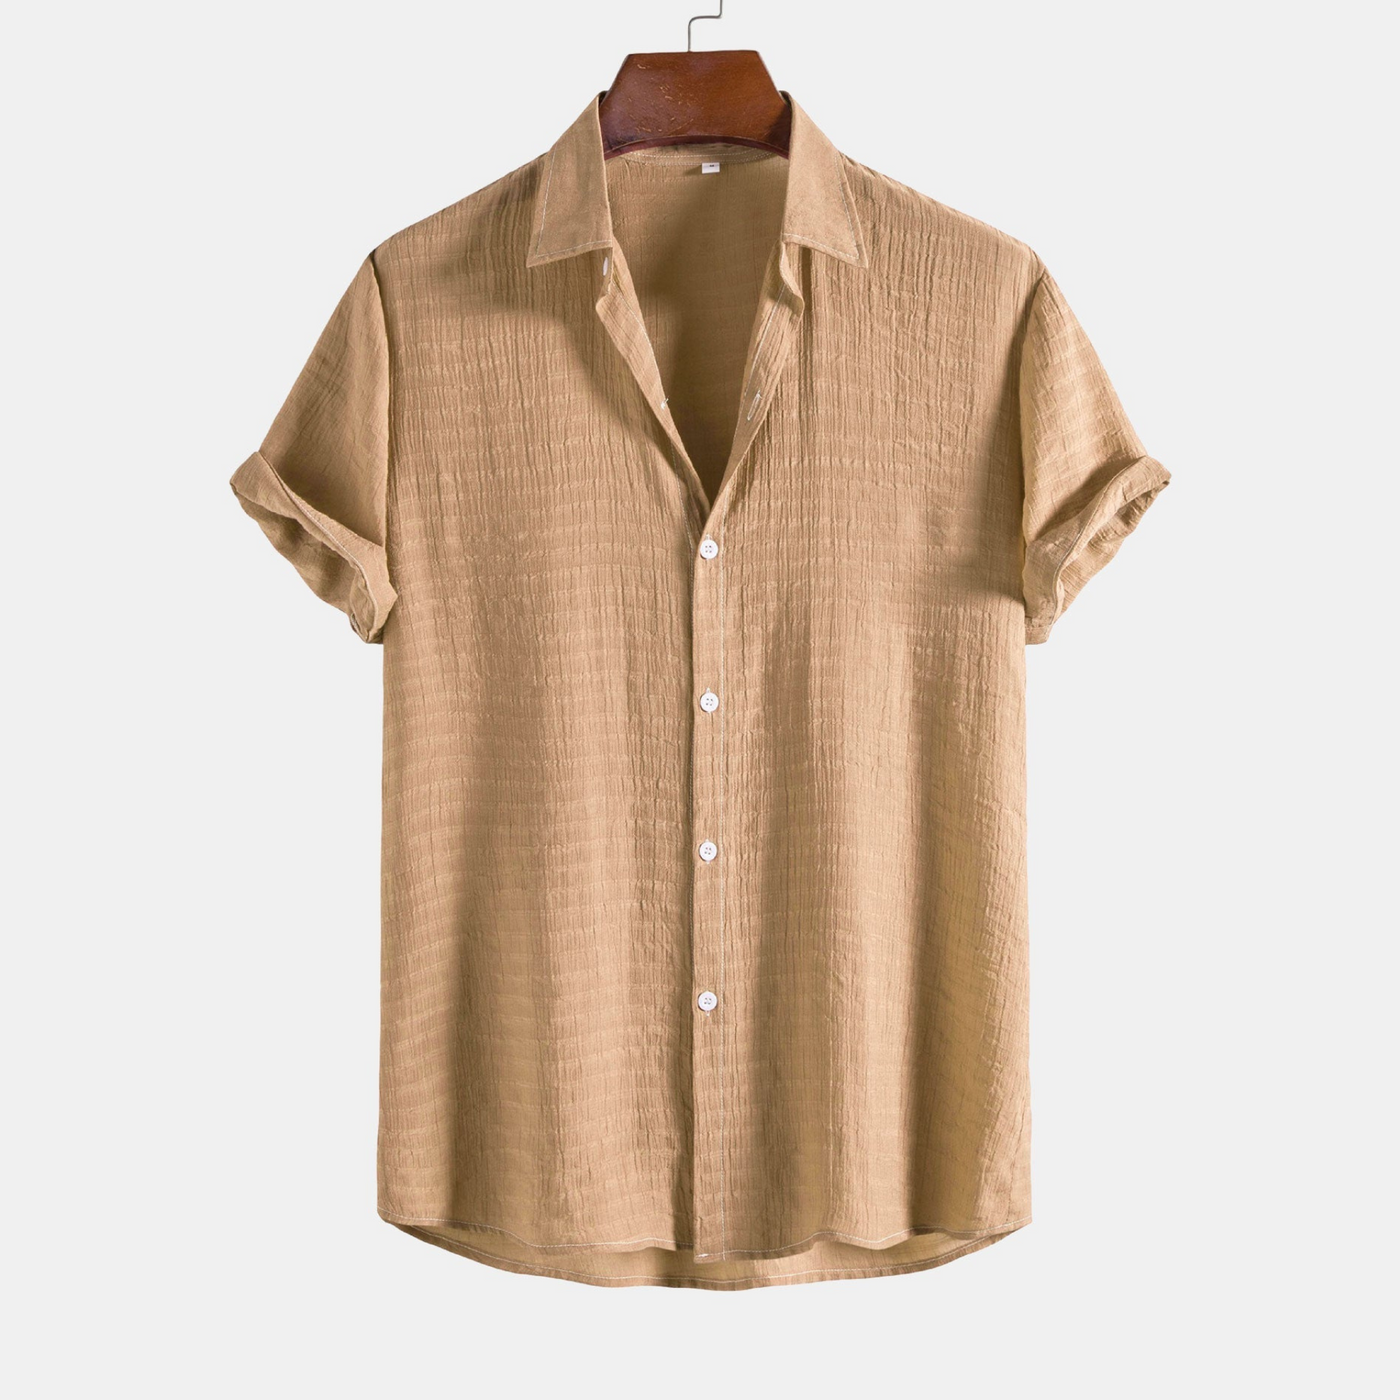 Short-Sleeve Shirt Made of Textured Fabric